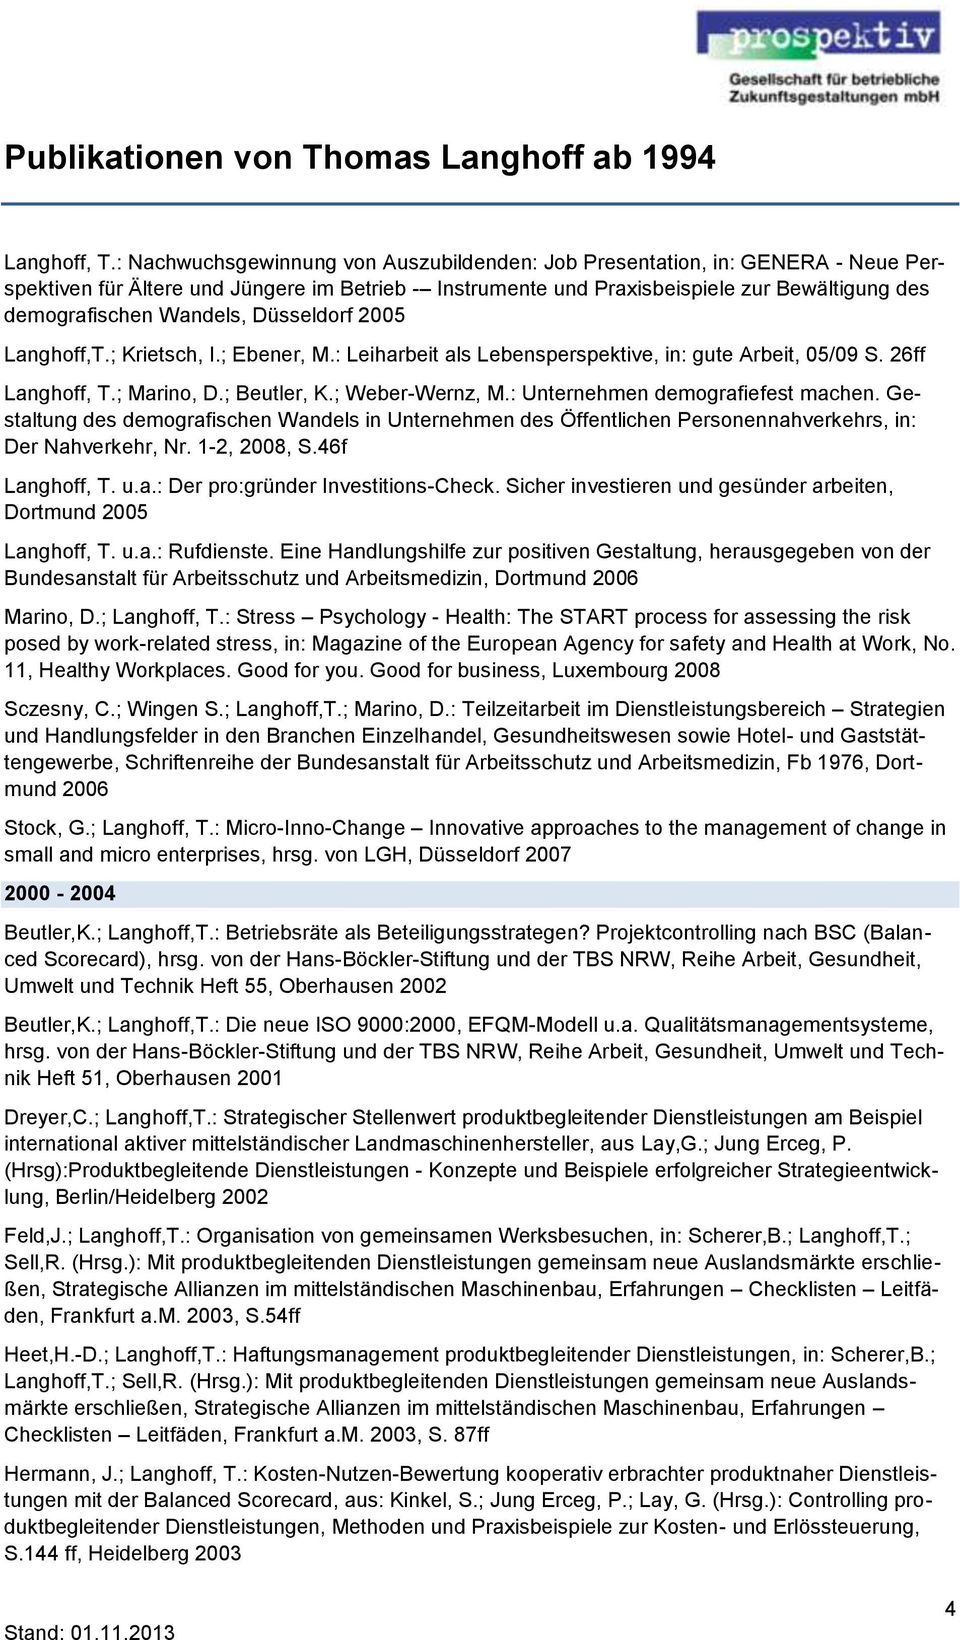 Wandels, Düsseldorf 2005 Langhoff,T.; Krietsch, I.; Ebener, M.: Leiharbeit als Lebensperspektive, in: gute Arbeit, 05/09 S. 26ff ; Marino, D.; Beutler, K.; Weber-Wernz, M.